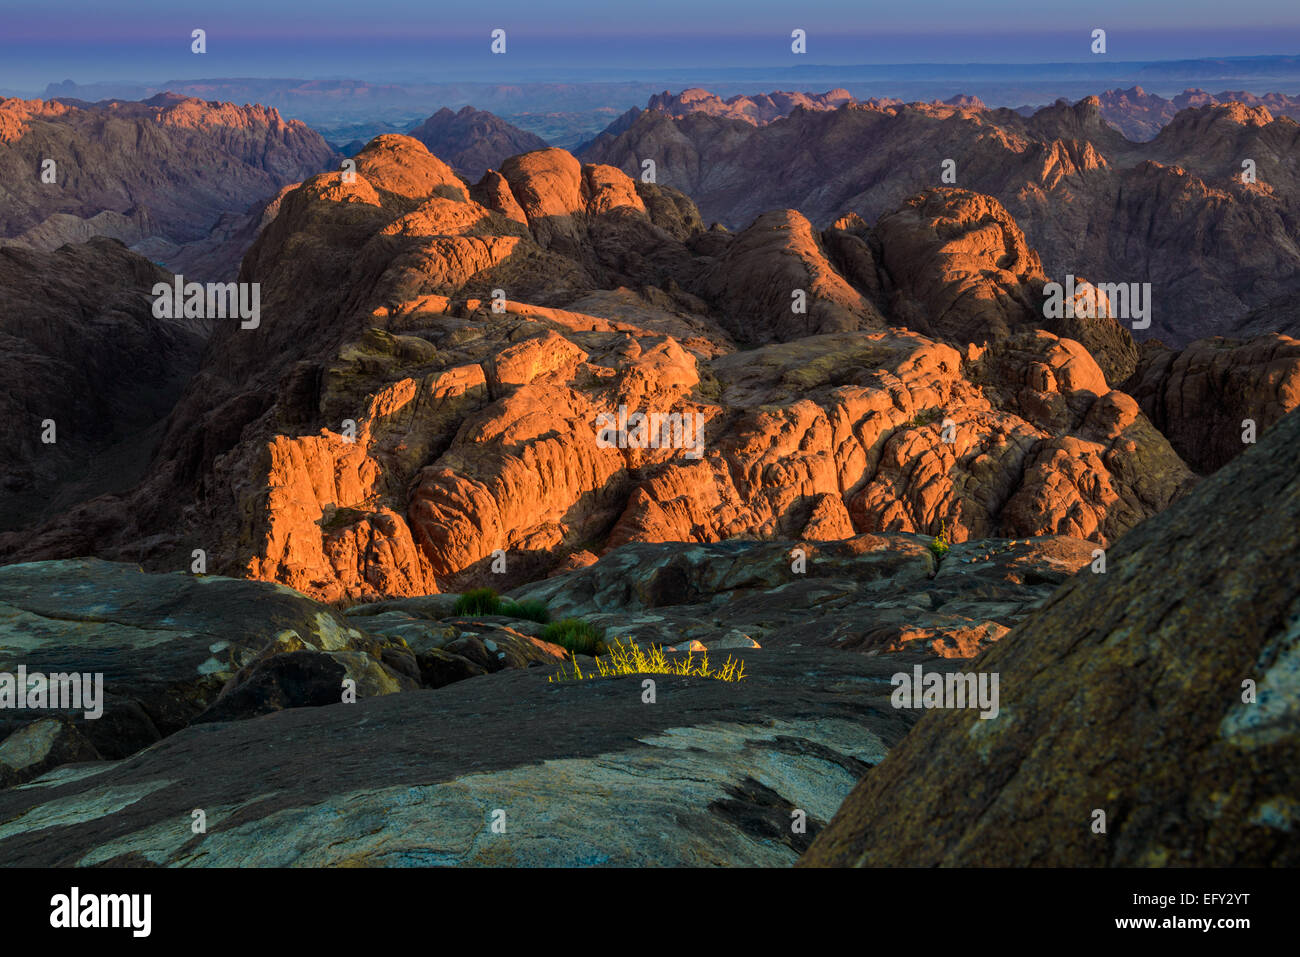 Mountain range in Sinai Peninsula, Egypt, lit by rising sun. Stock Photo